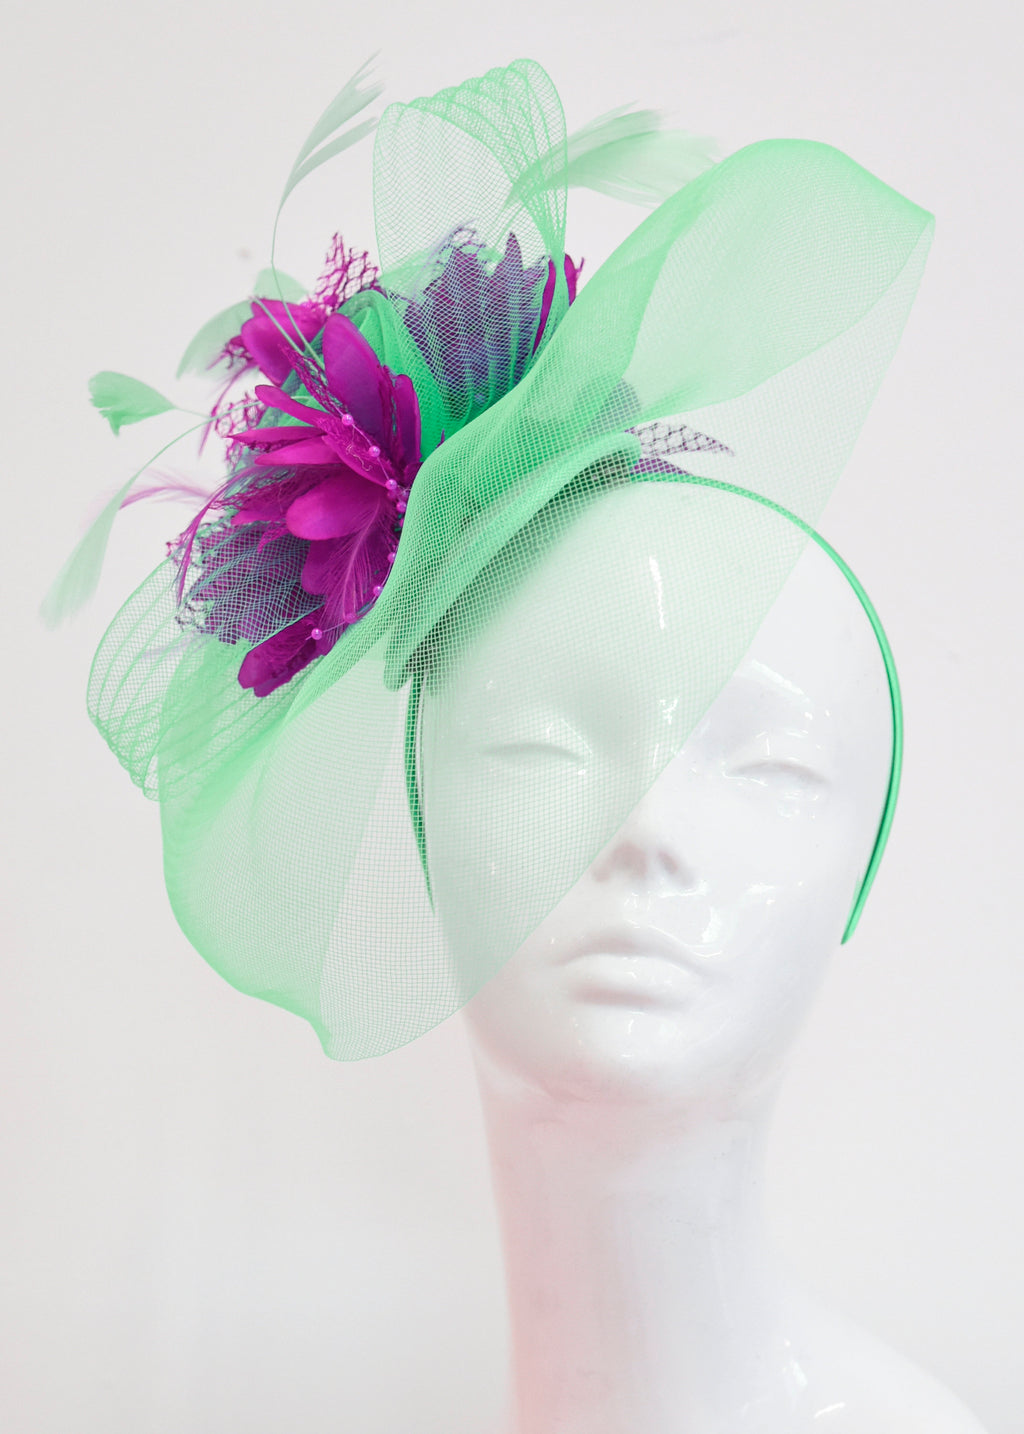 Caprilite Big Mint Green and Fuchsia Hot Pink Fascinator Hat Veil Net Ascot Derby Races Wedding Headband Feather